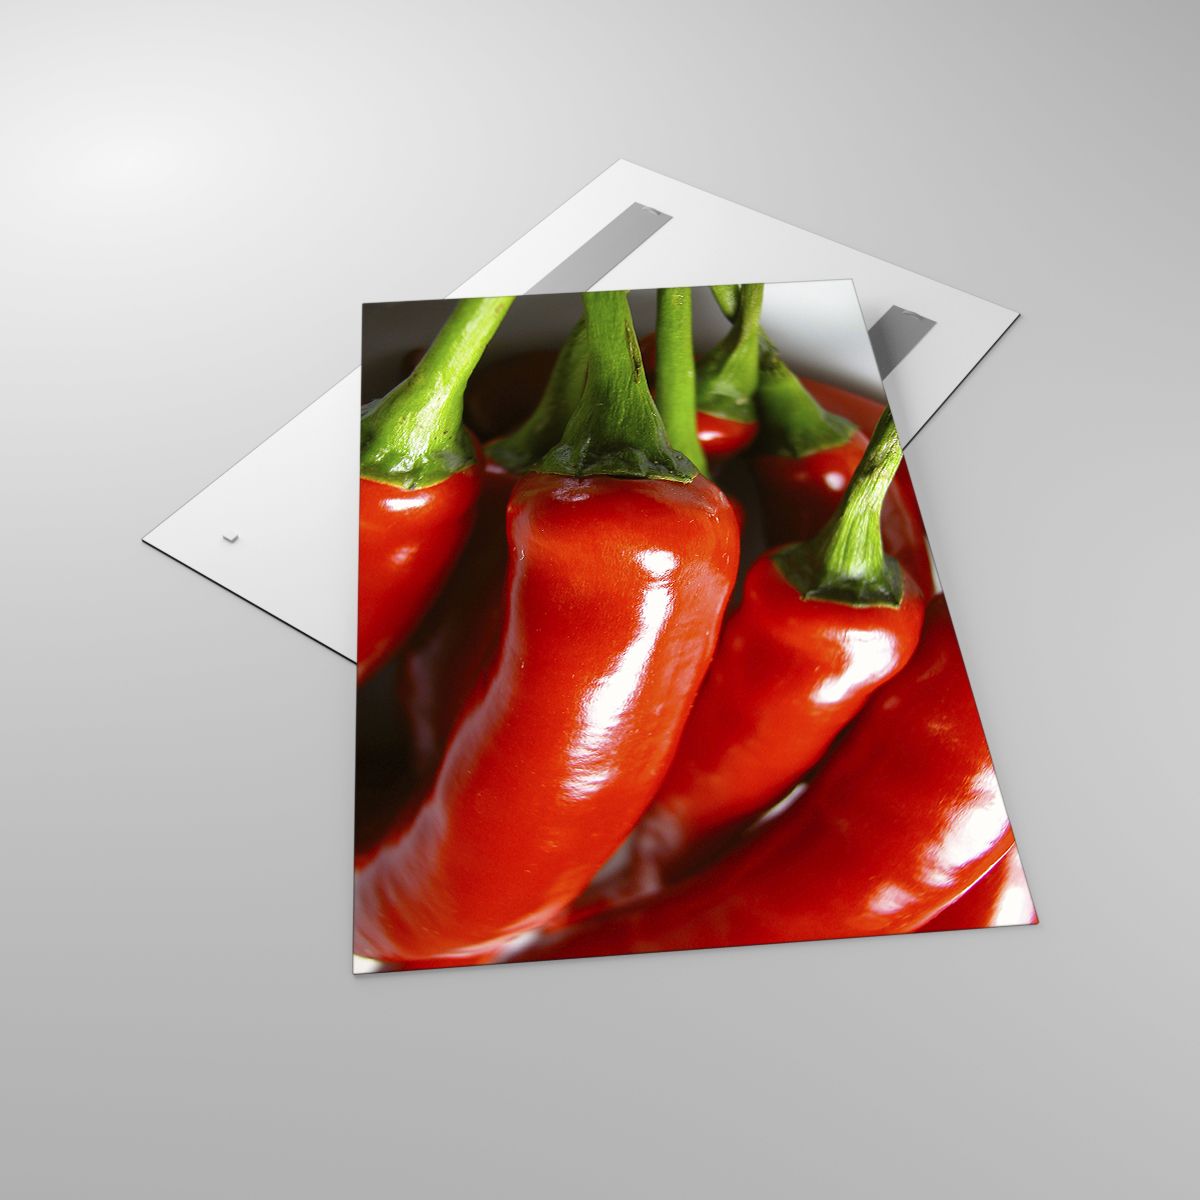 Glasbild Gastronomie, Glasbild Pfeffer, Glasbild Gemüse, Glasbild Chili, Glasbild Kulinarisch